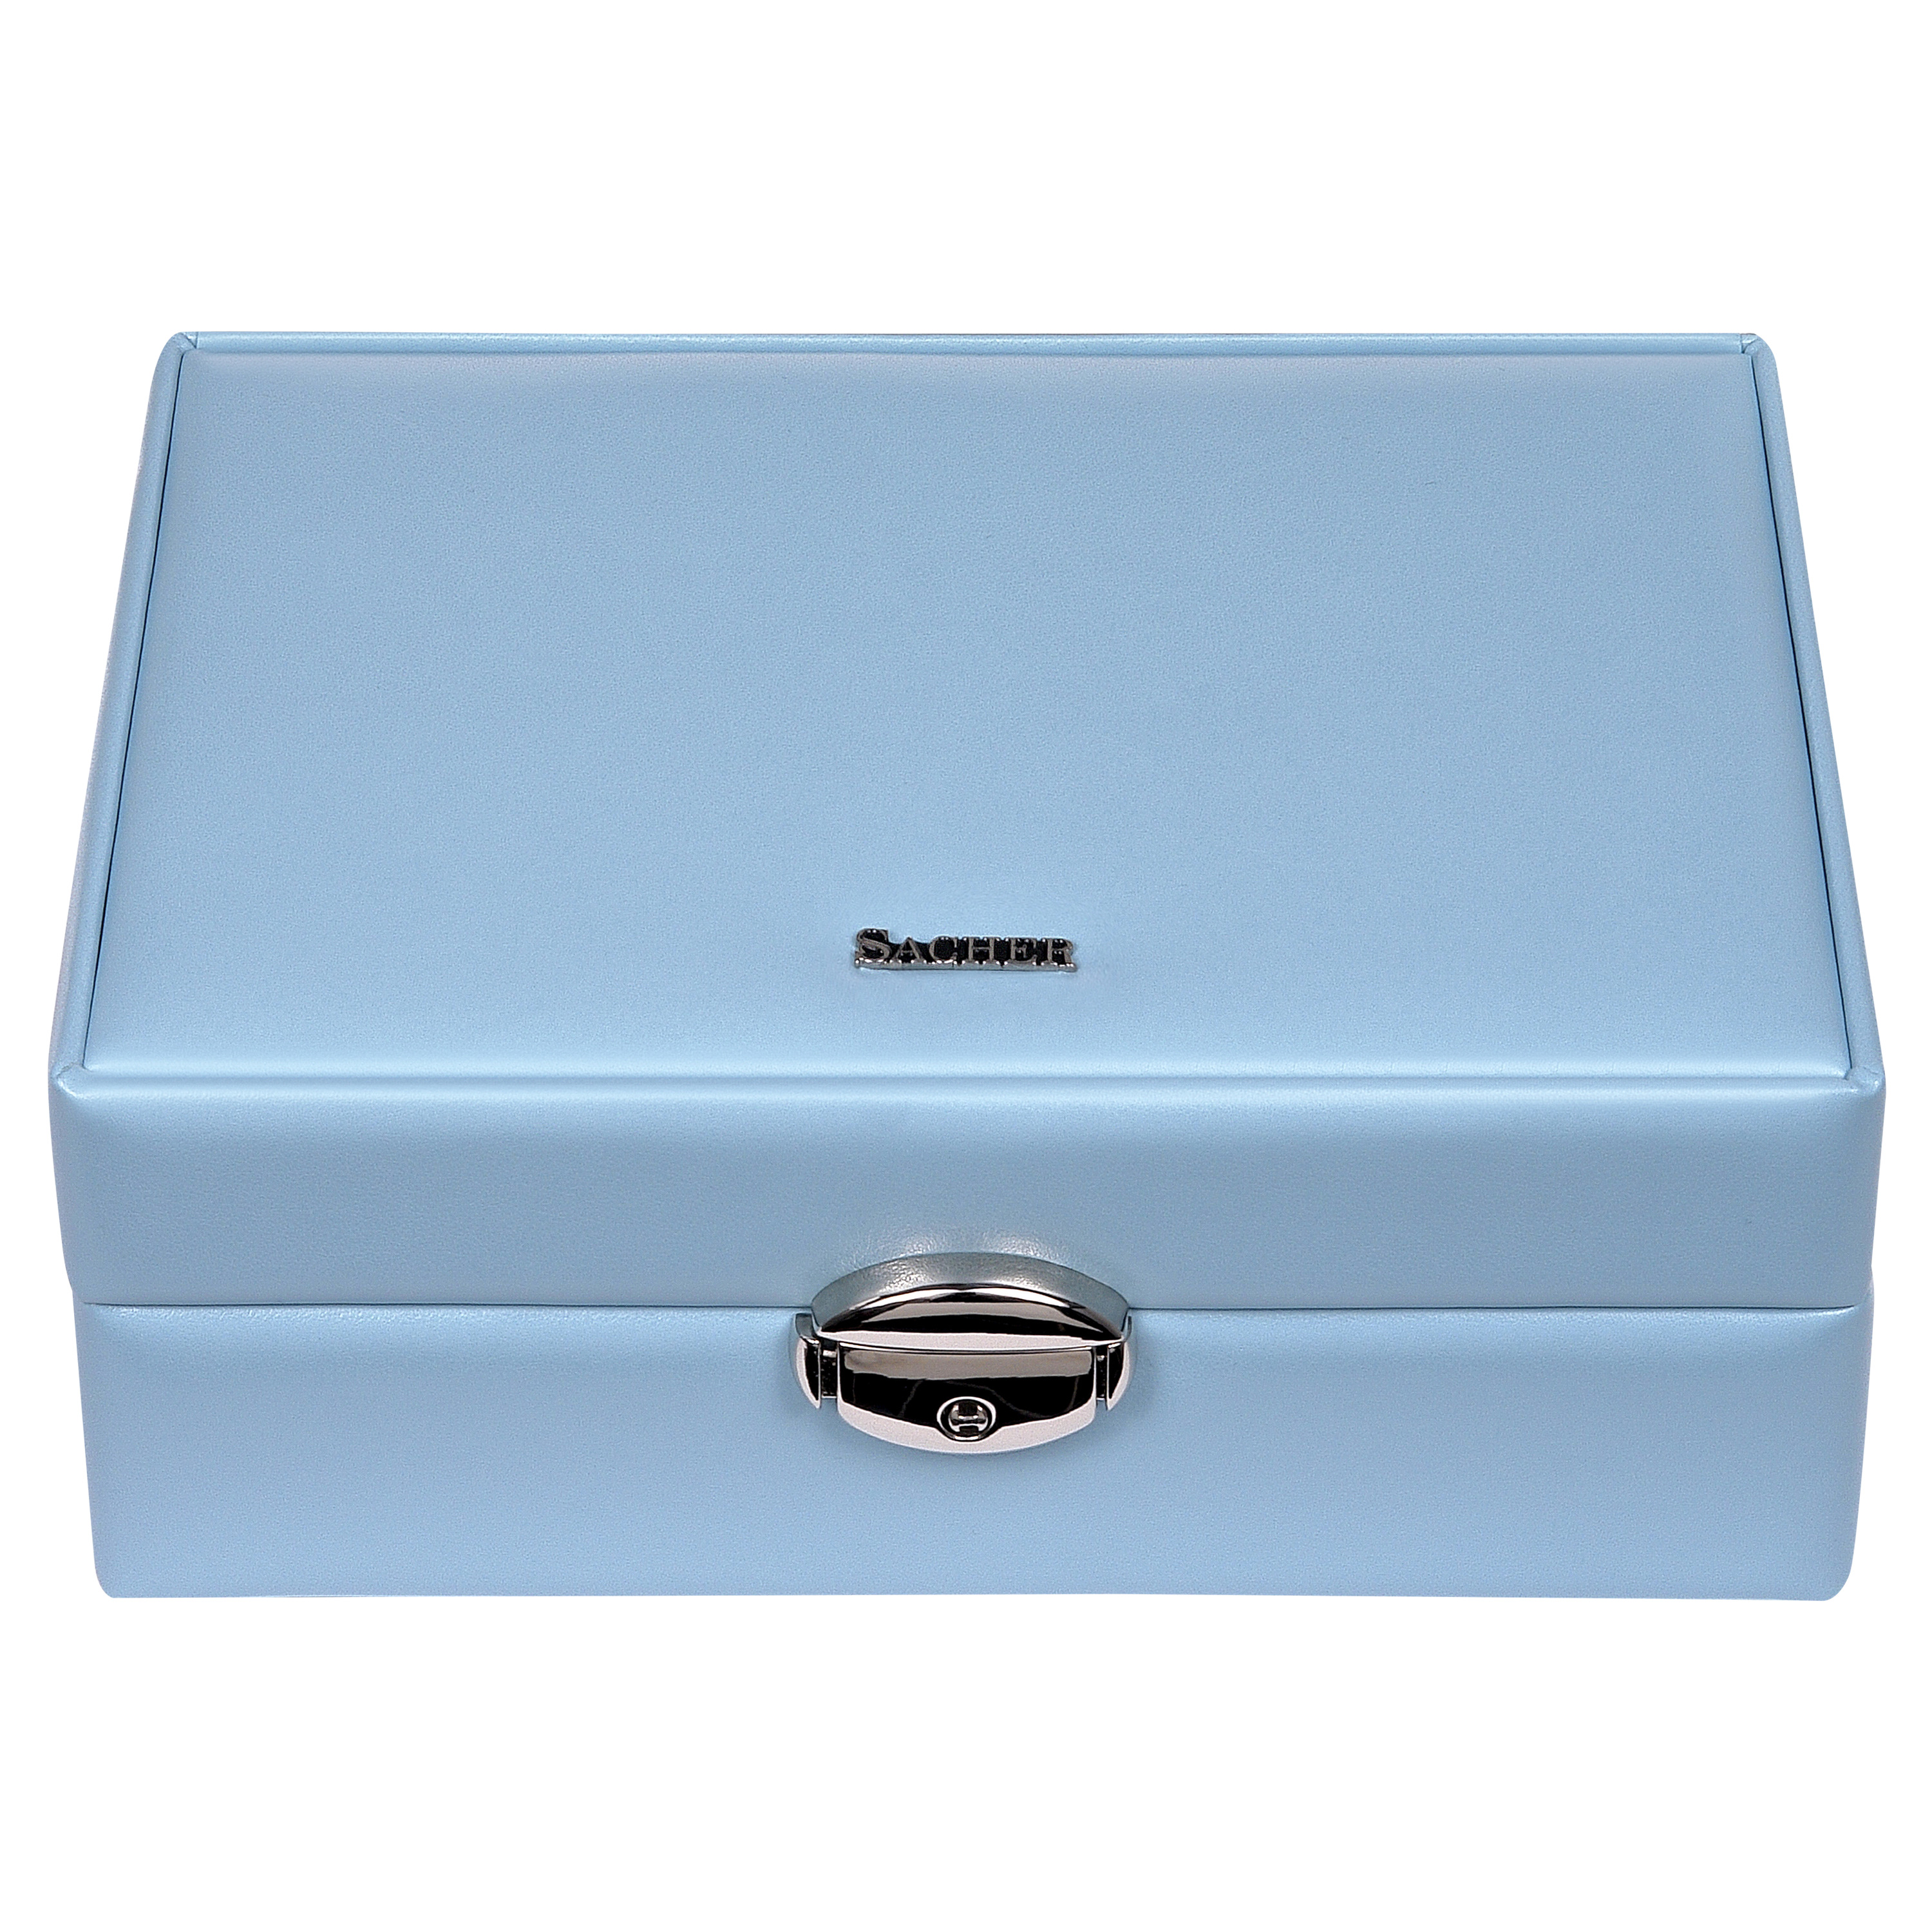 Britta colouranti / light blue jewellery box